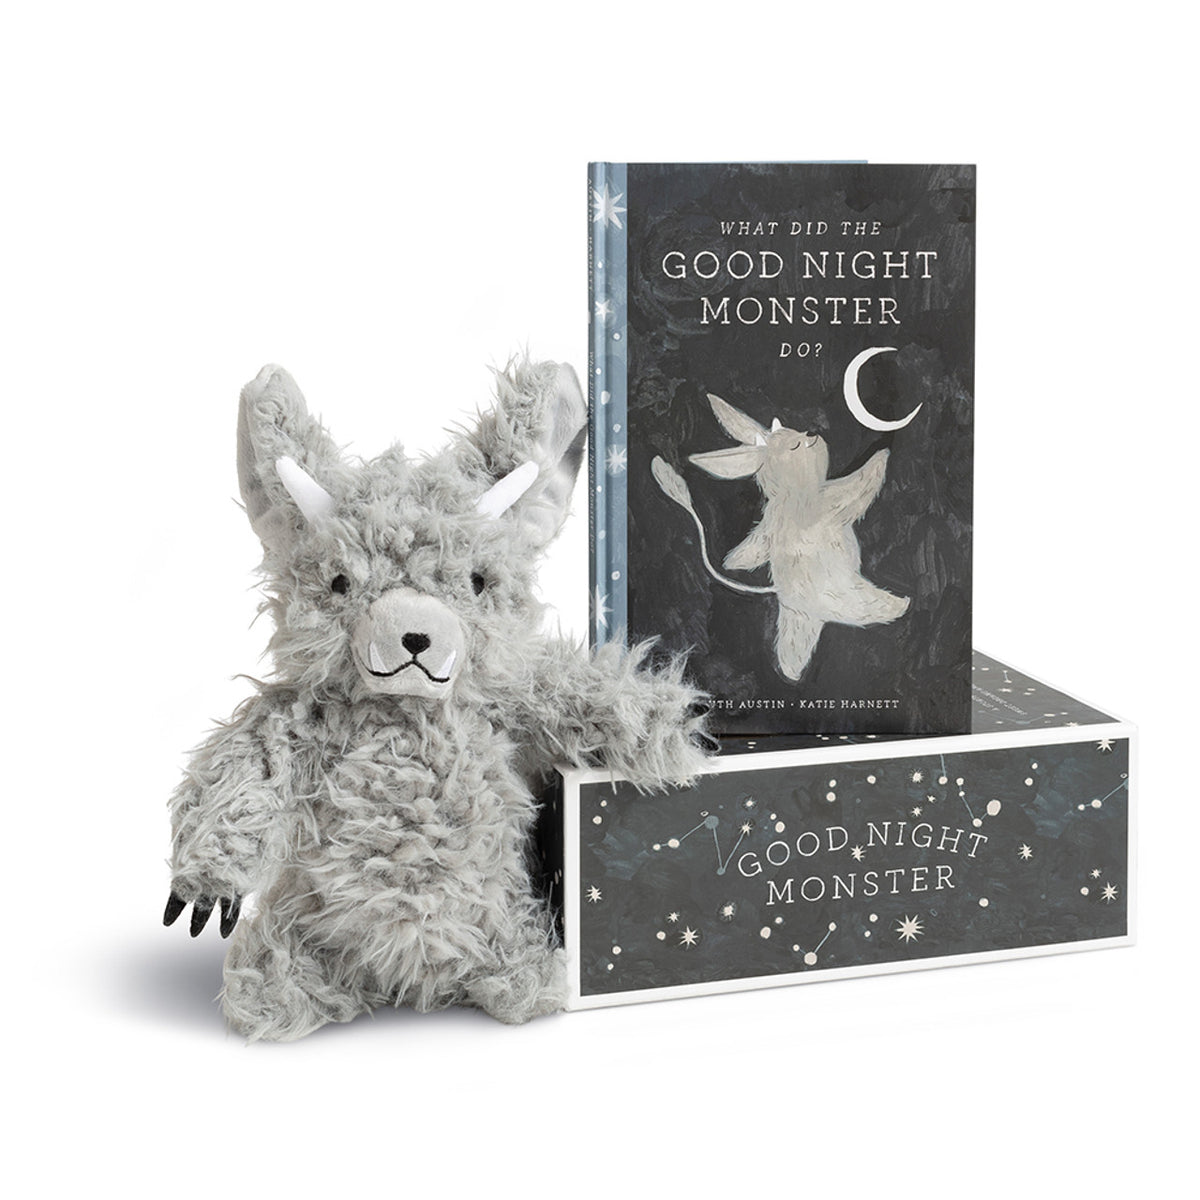 Good Night Monster Book & Plush Set Cover